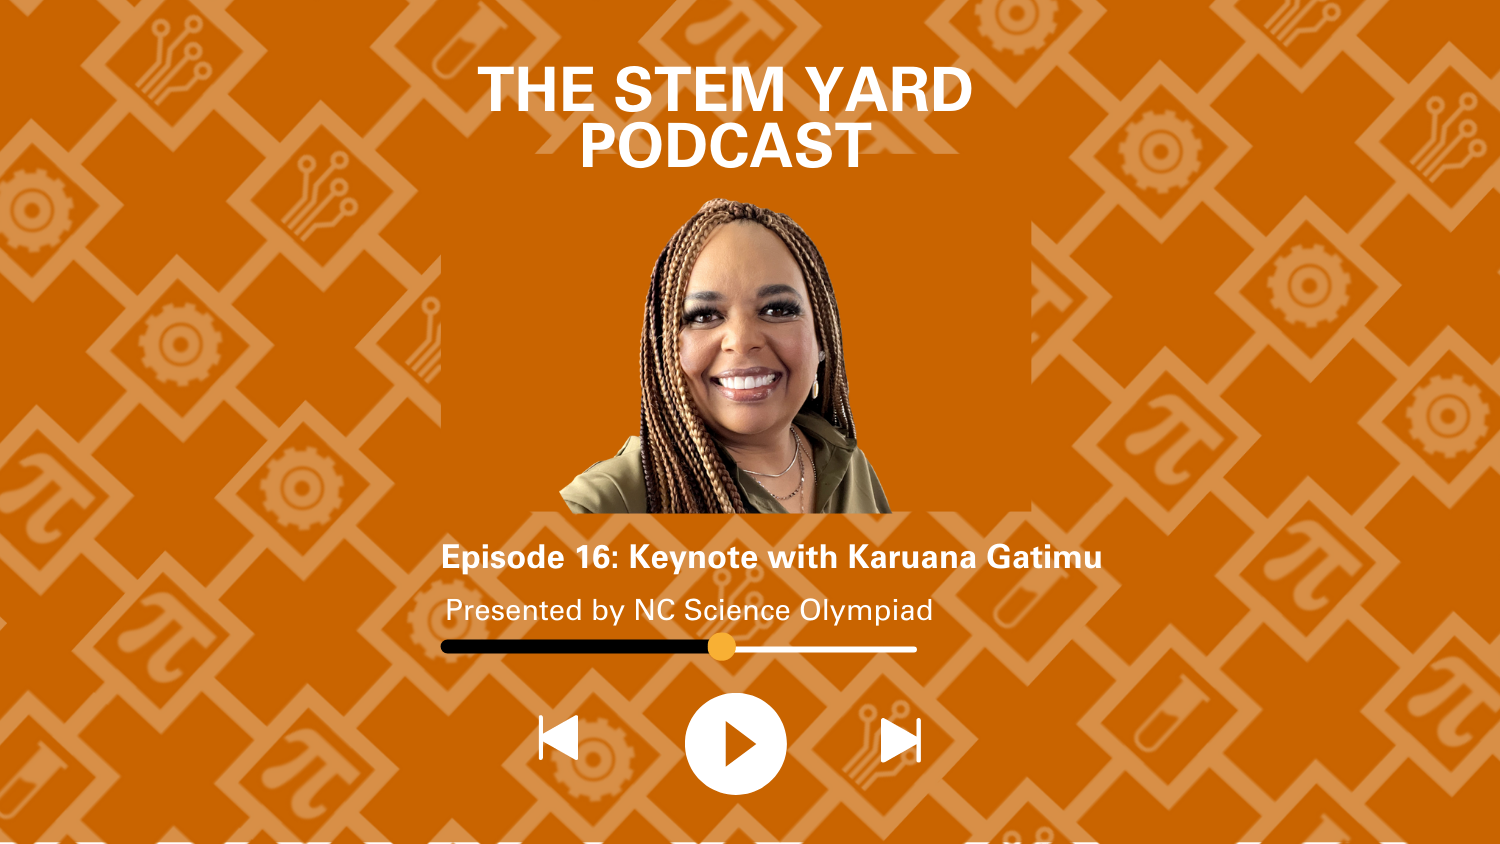 The STEM Yard - Episode 16 Keynote with Karuana Gatimu